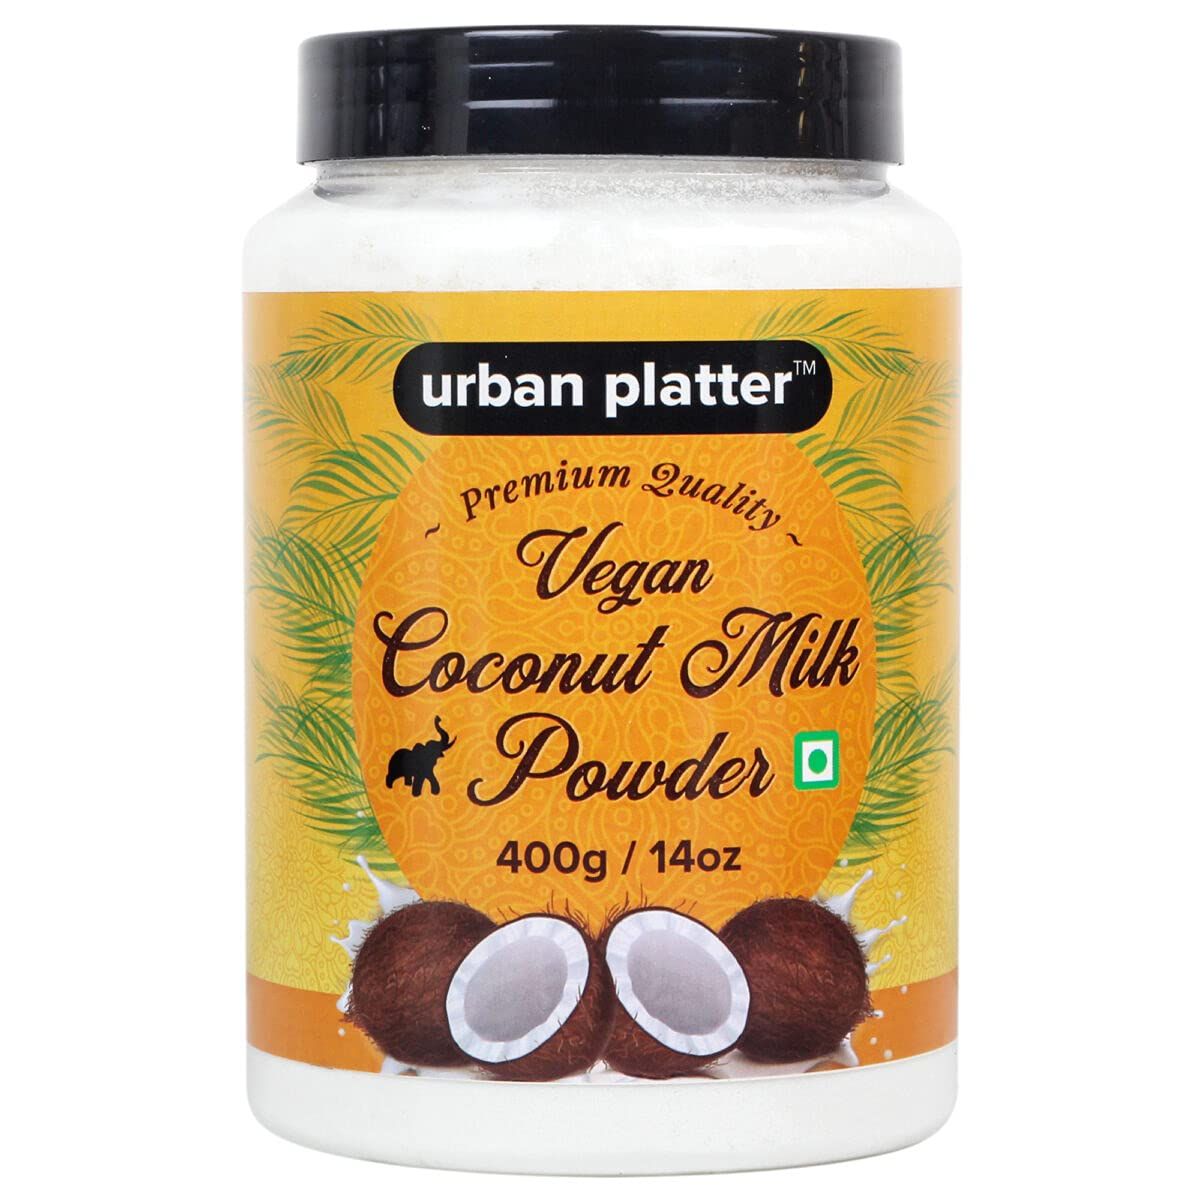 Urban Platter Vegan Coconut Milk Image